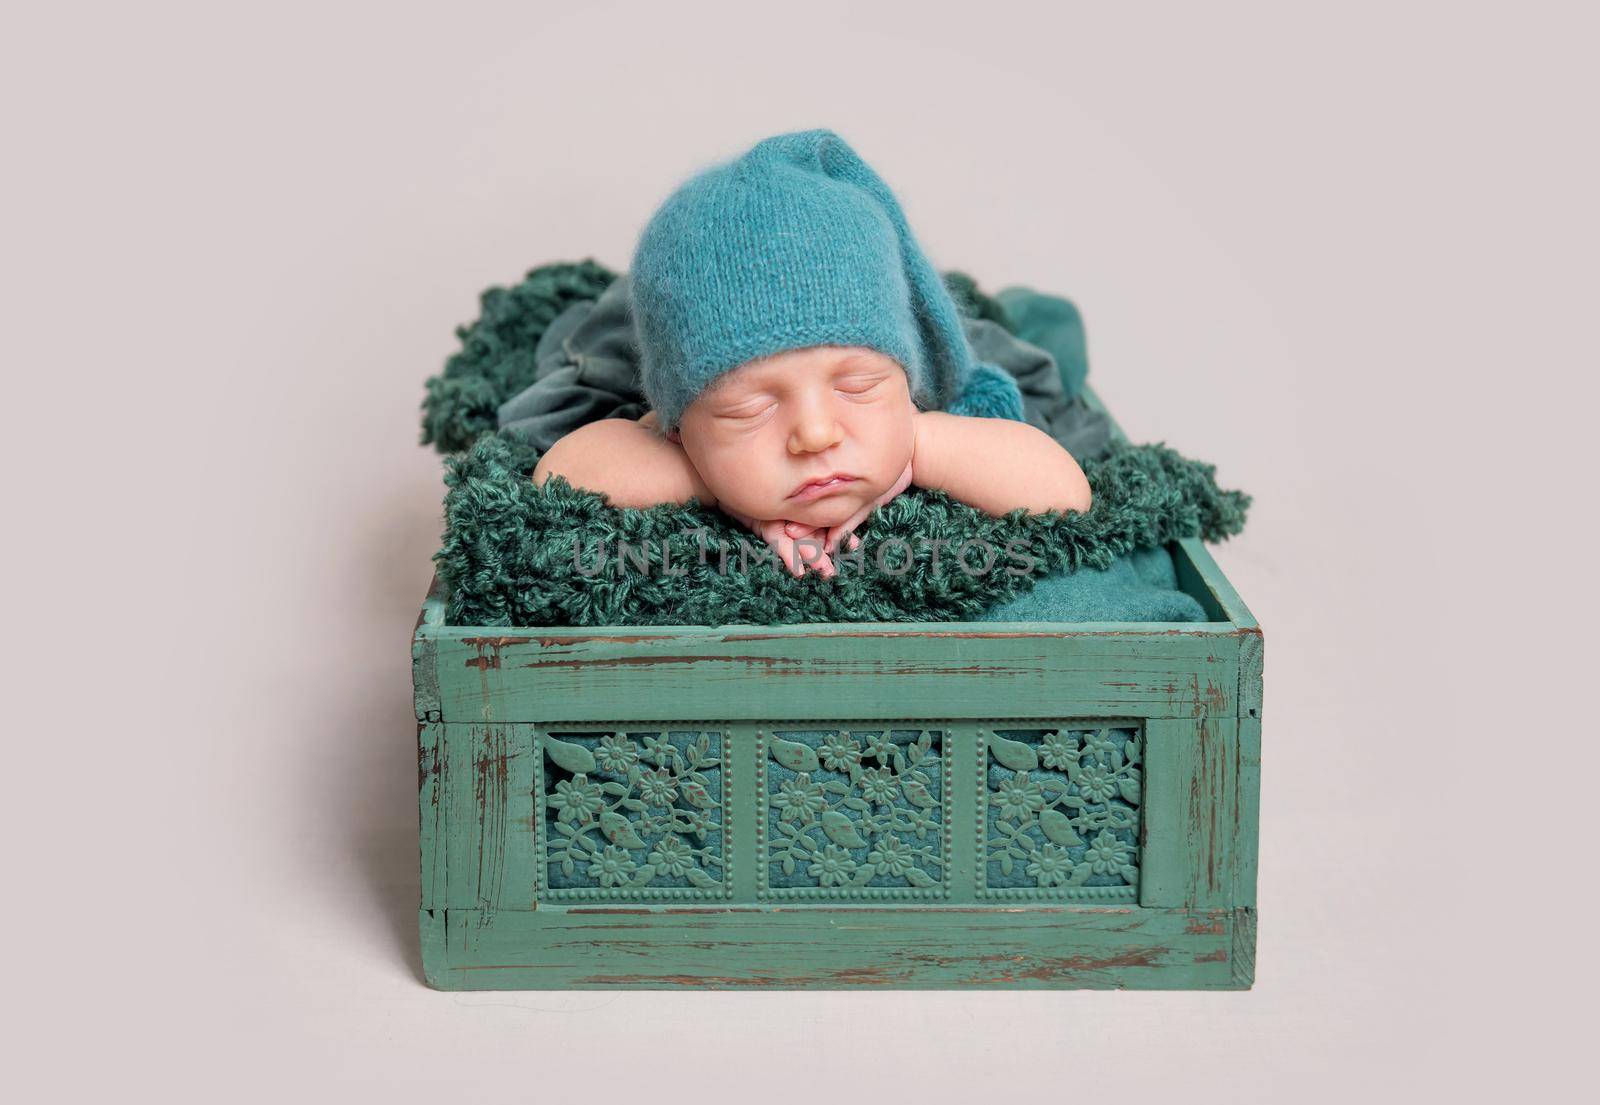 Newborn baby lying in wooden crate by tan4ikk1